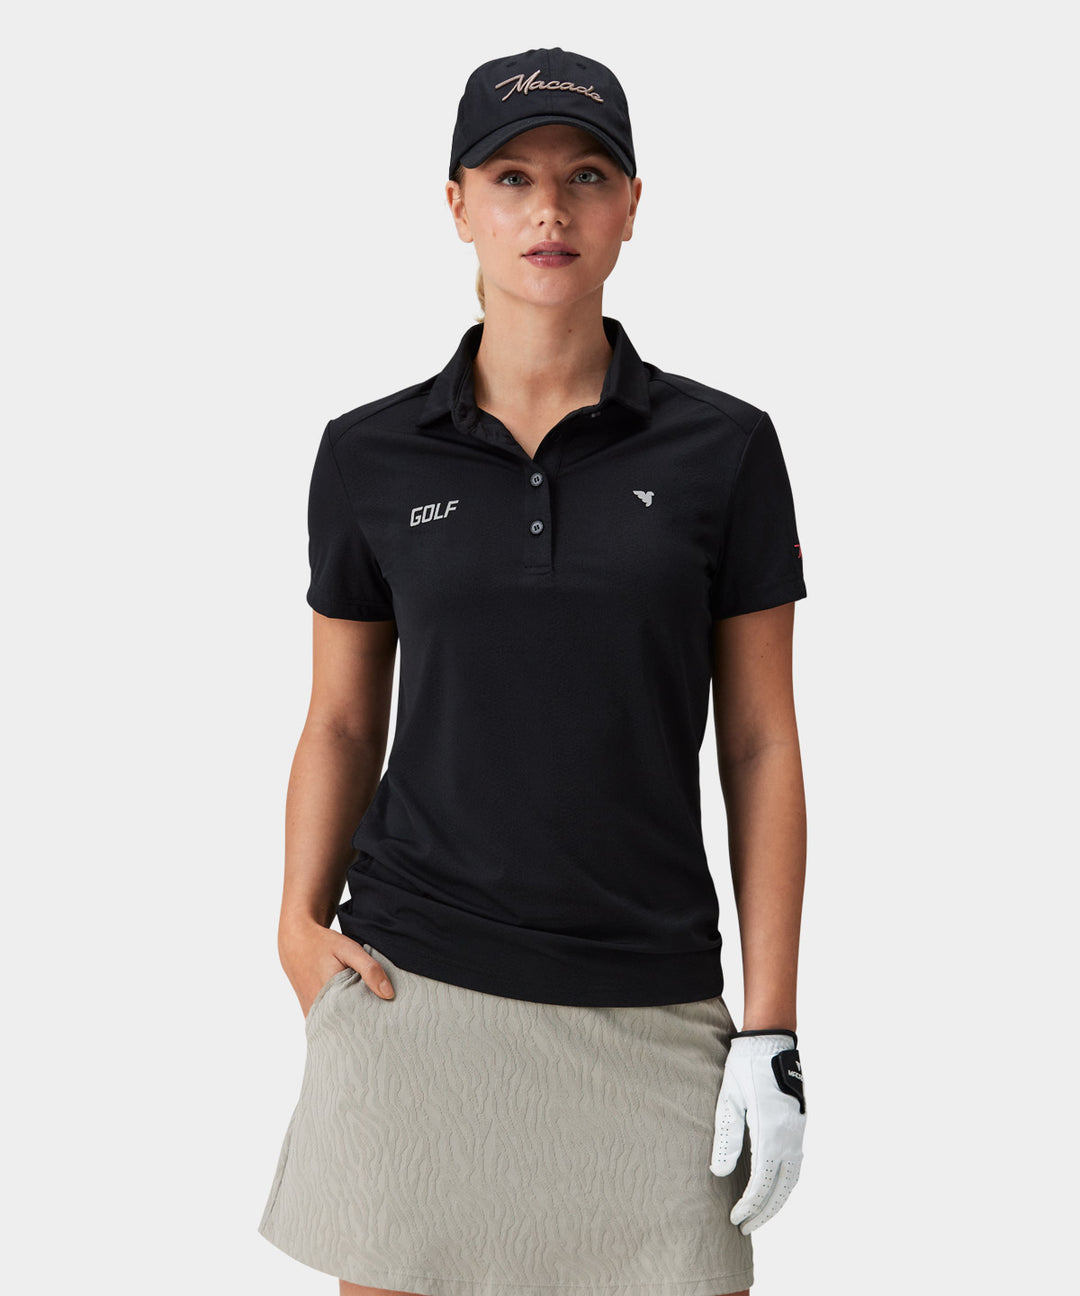 Gaia Black Performance Shirt Macade Golf